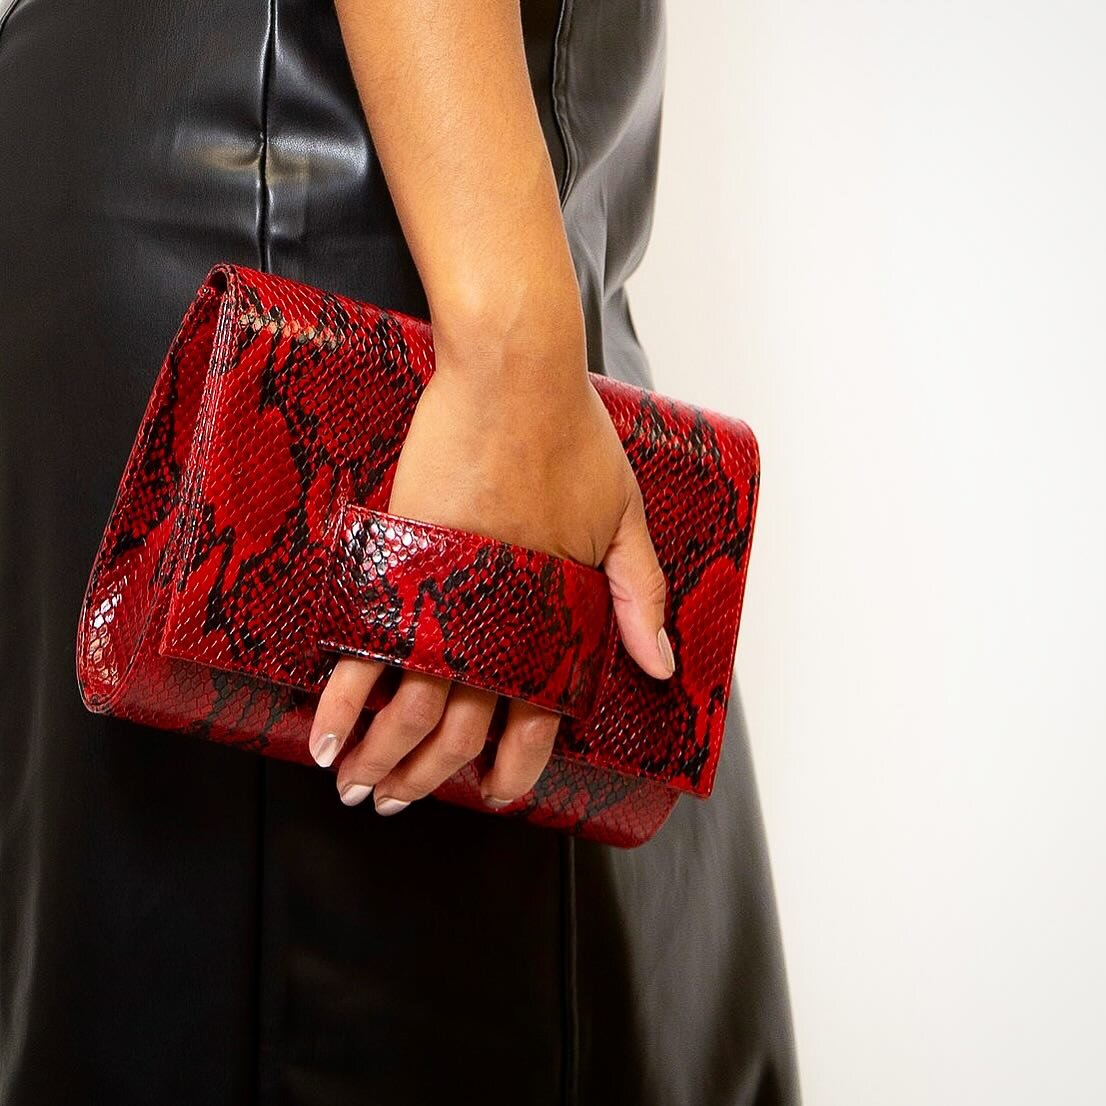 A bag to transform your entire look &hellip; KD red snake print #statementbag #psherrodbags #leatherlifestyle #leatherhandbag #redsnake #redsnakeprint #redsnakebag #handbagdesigner #holidaystyle